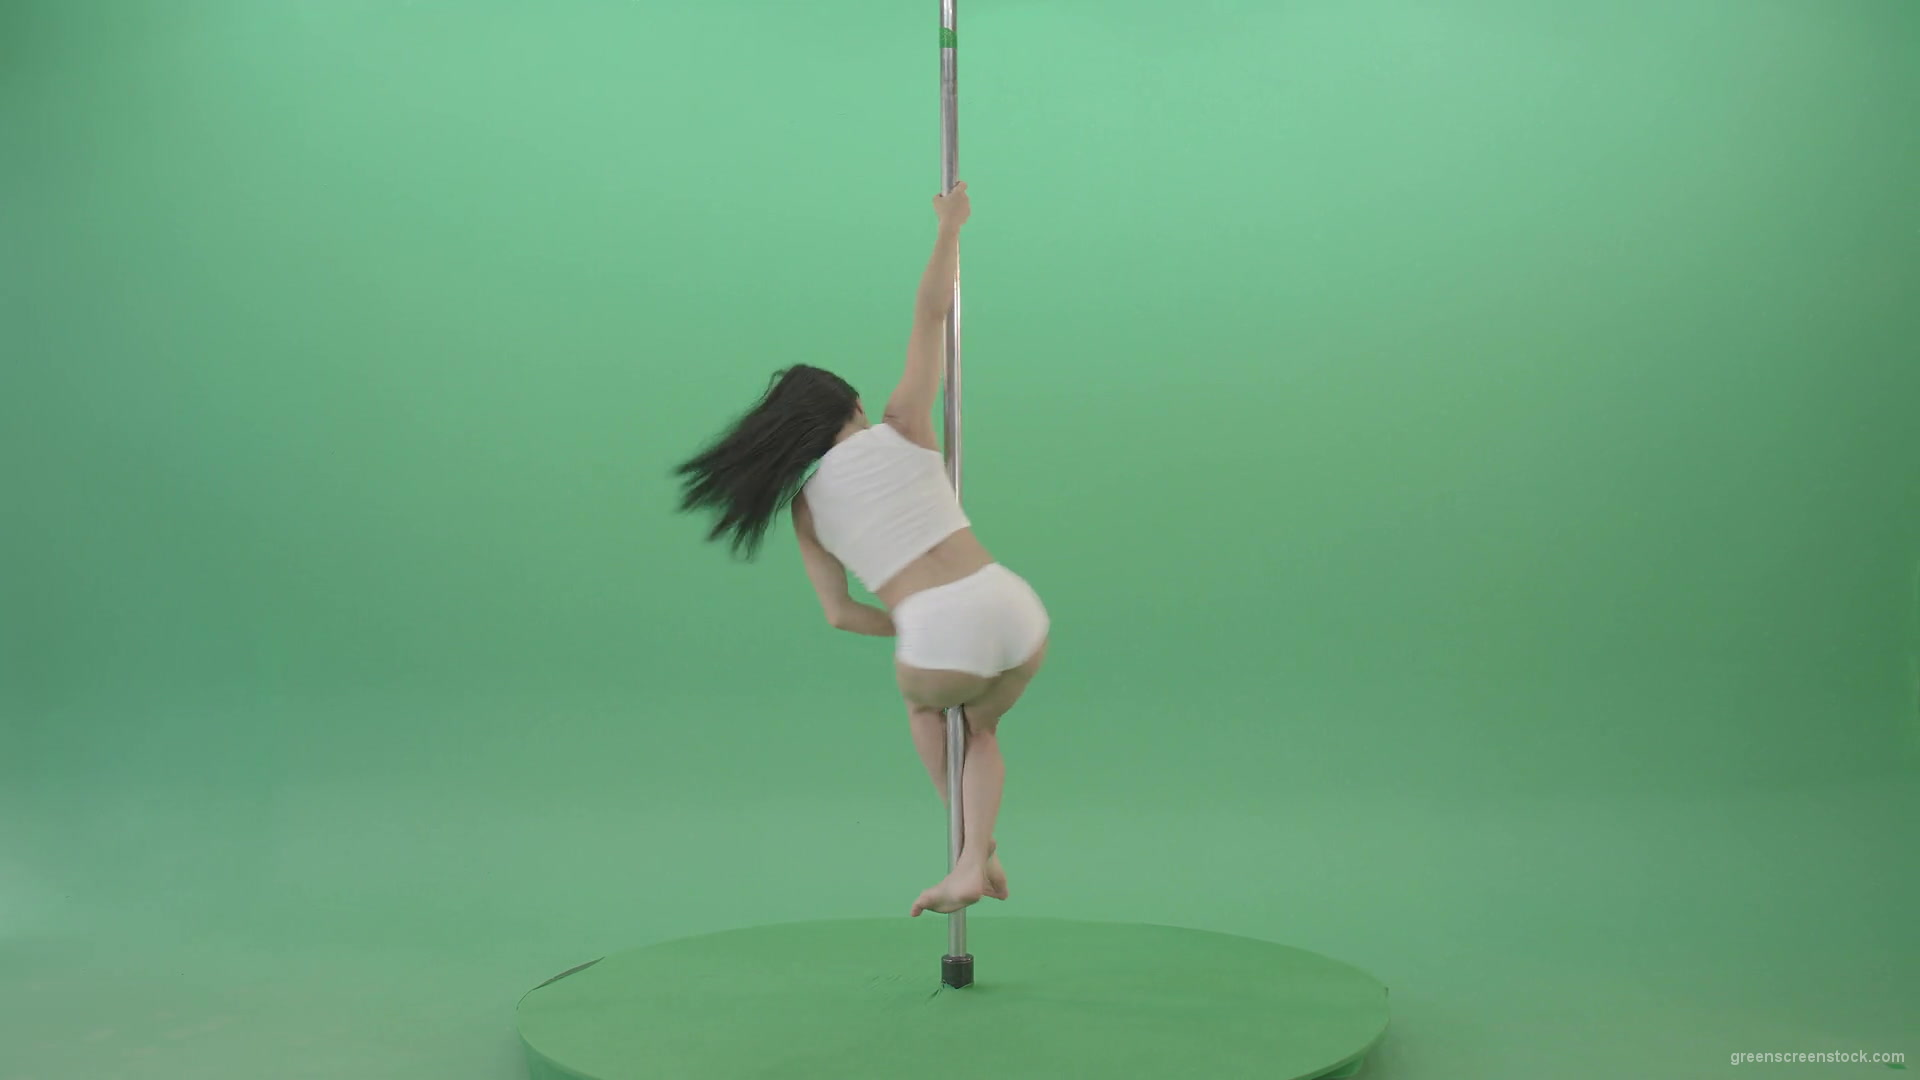 Pole-dance-trainer-girl-has-a-sport-flight-on-green-screen-4K-Video-Footage-1920_008 Green Screen Stock